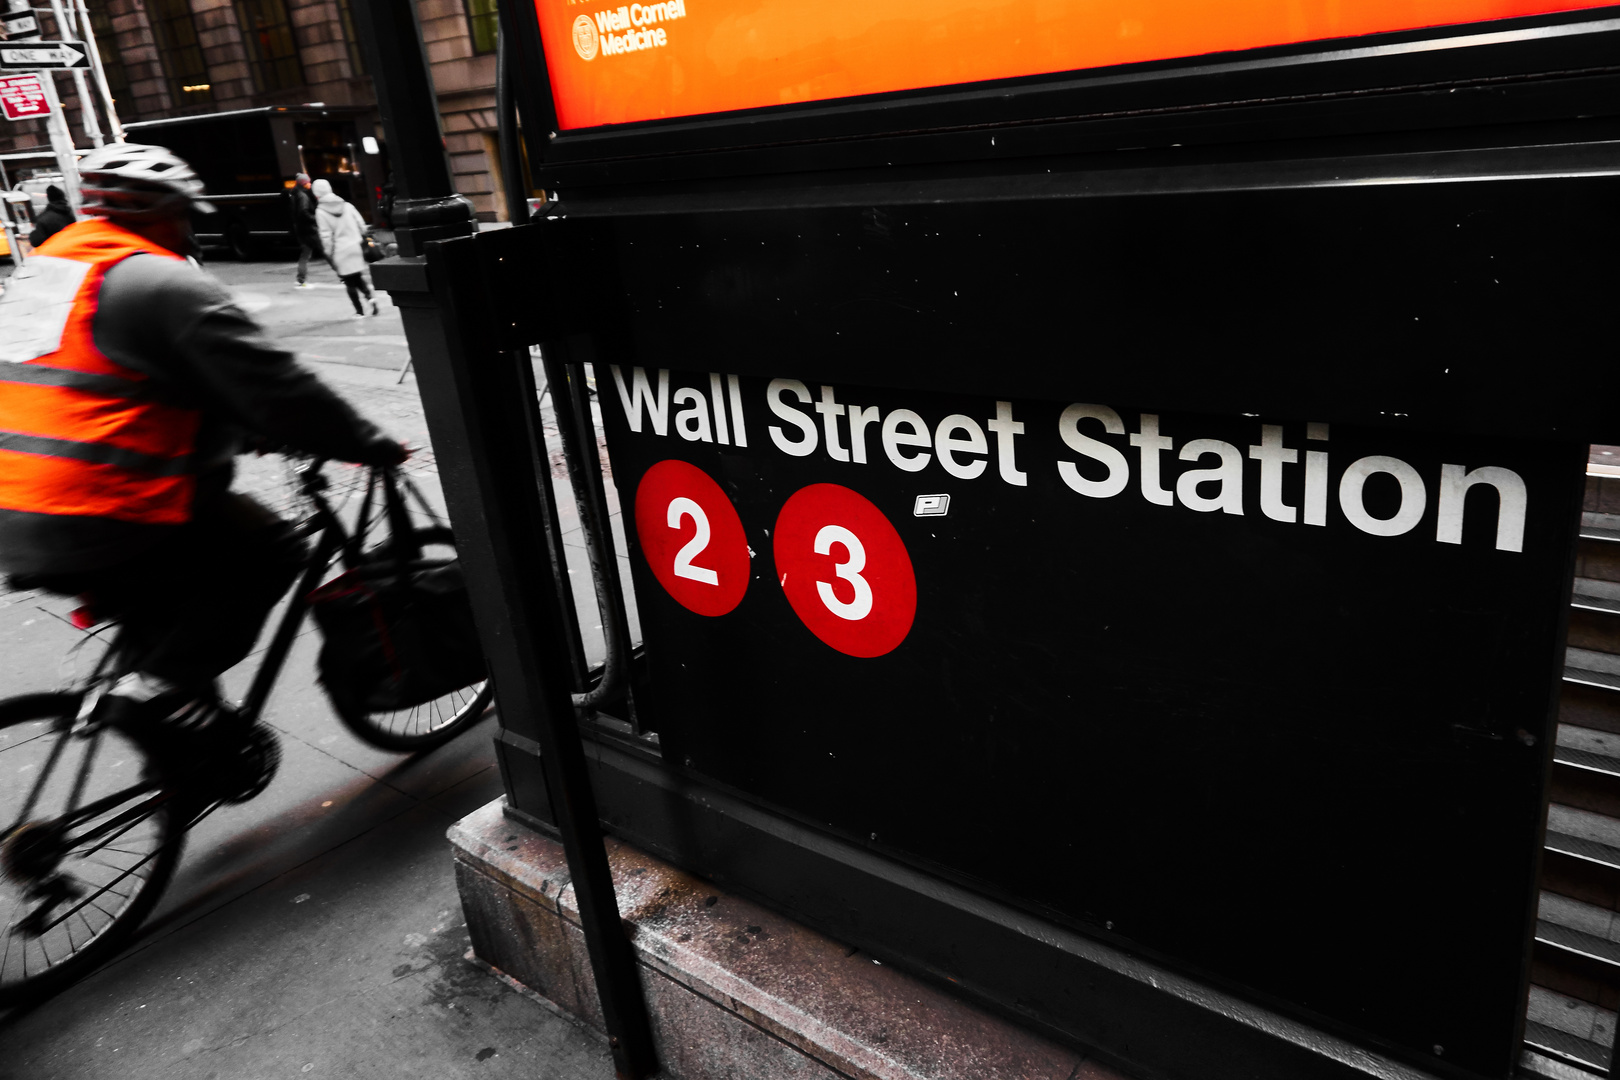 Wall Street Station